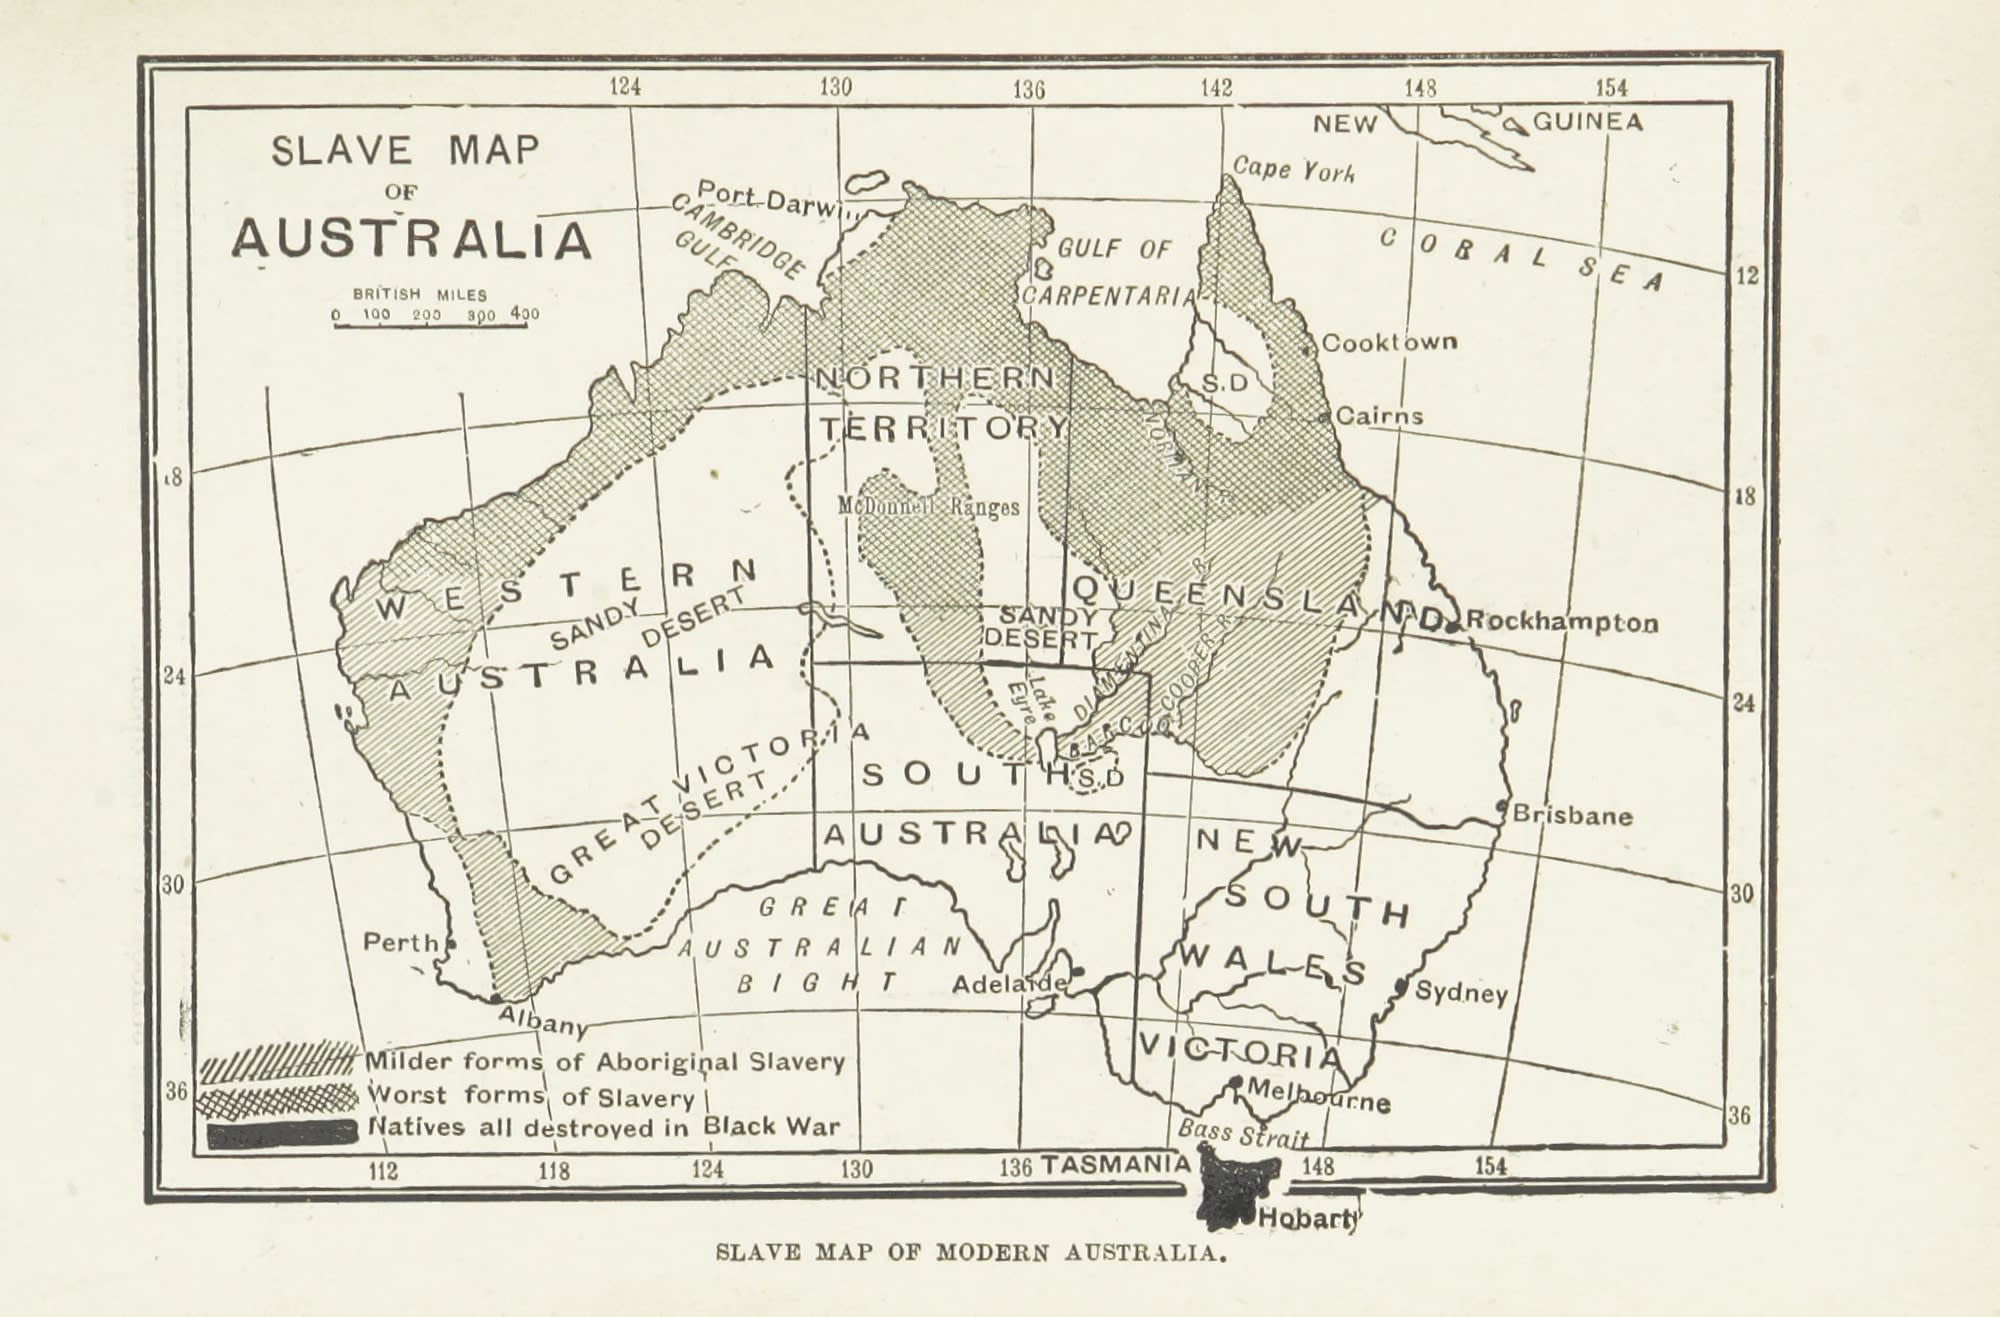 Historic "slave map" of Australia